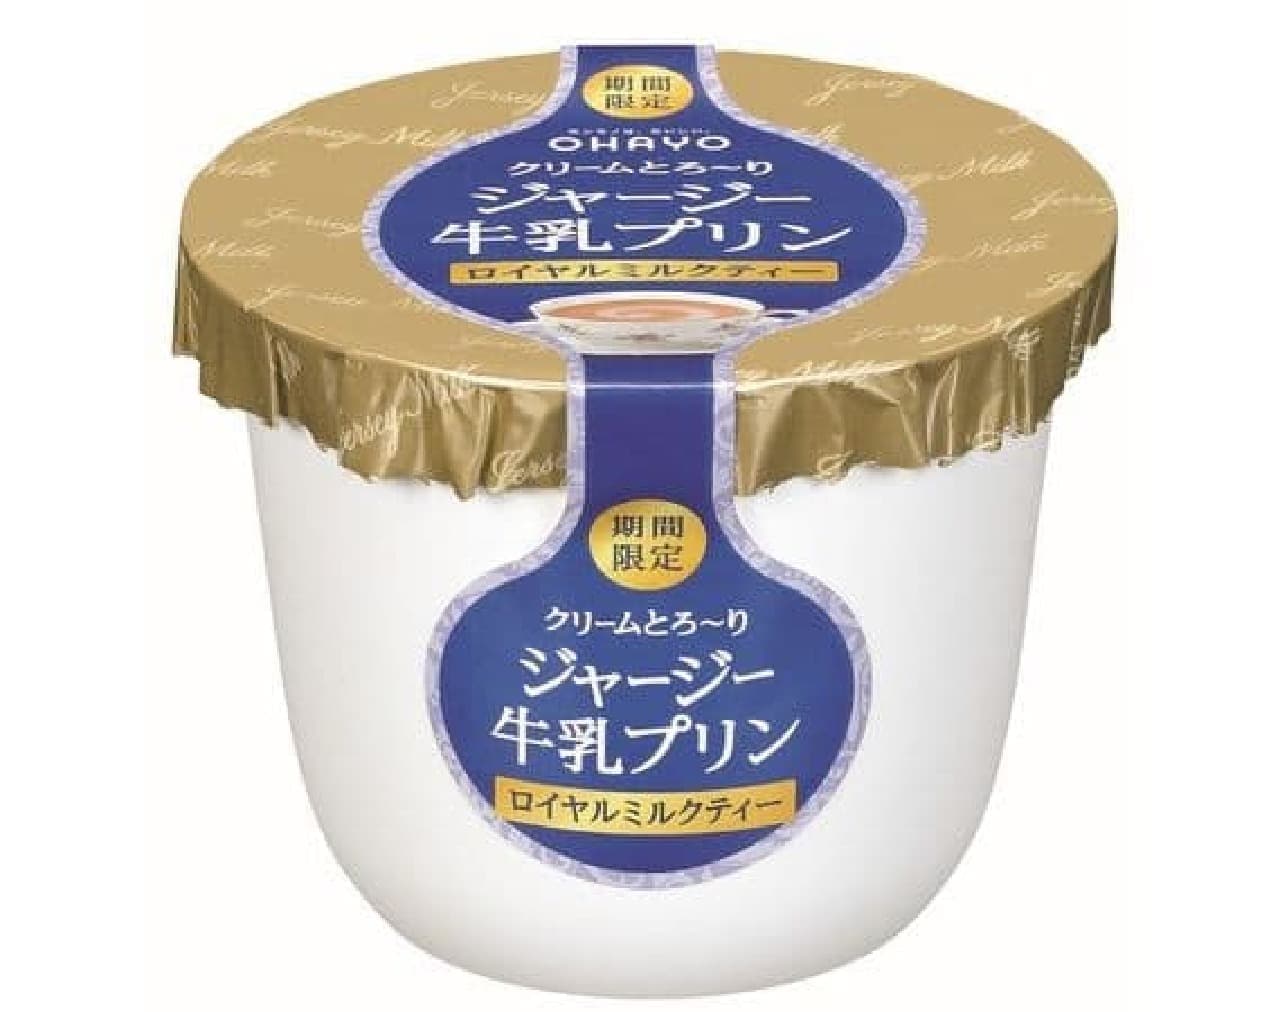 Ohayo Dairy Products "Jersey Milk Pudding Royal Milk Tea"